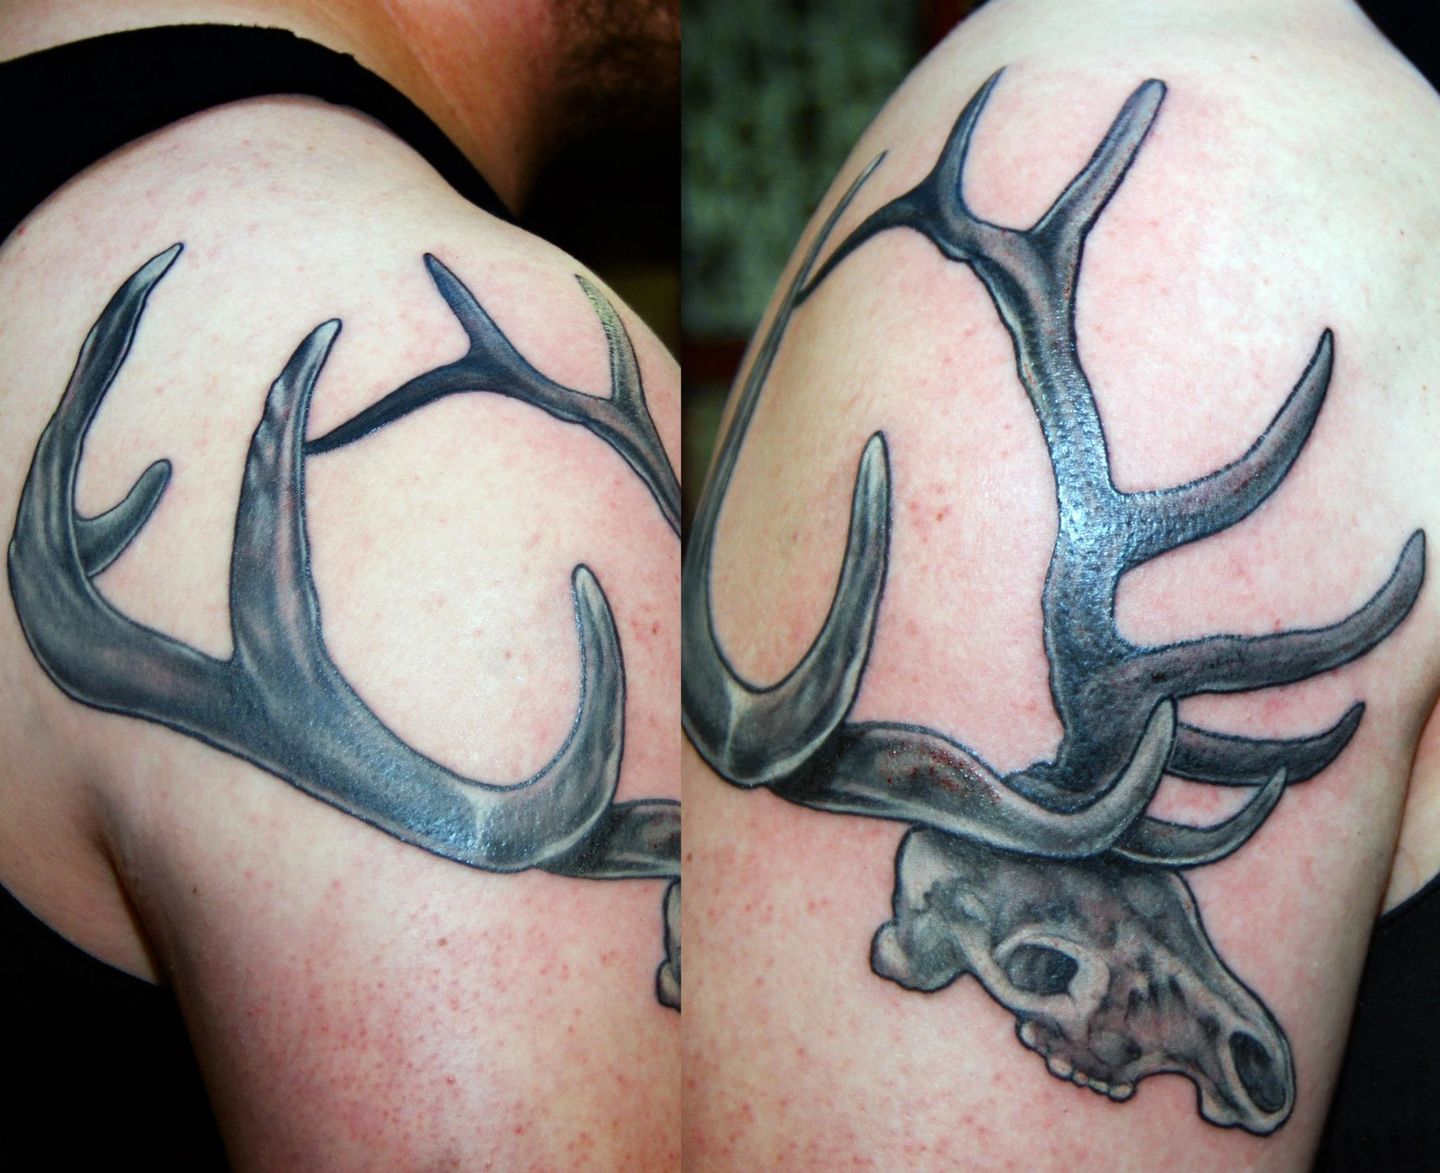 deer and cross tattoo